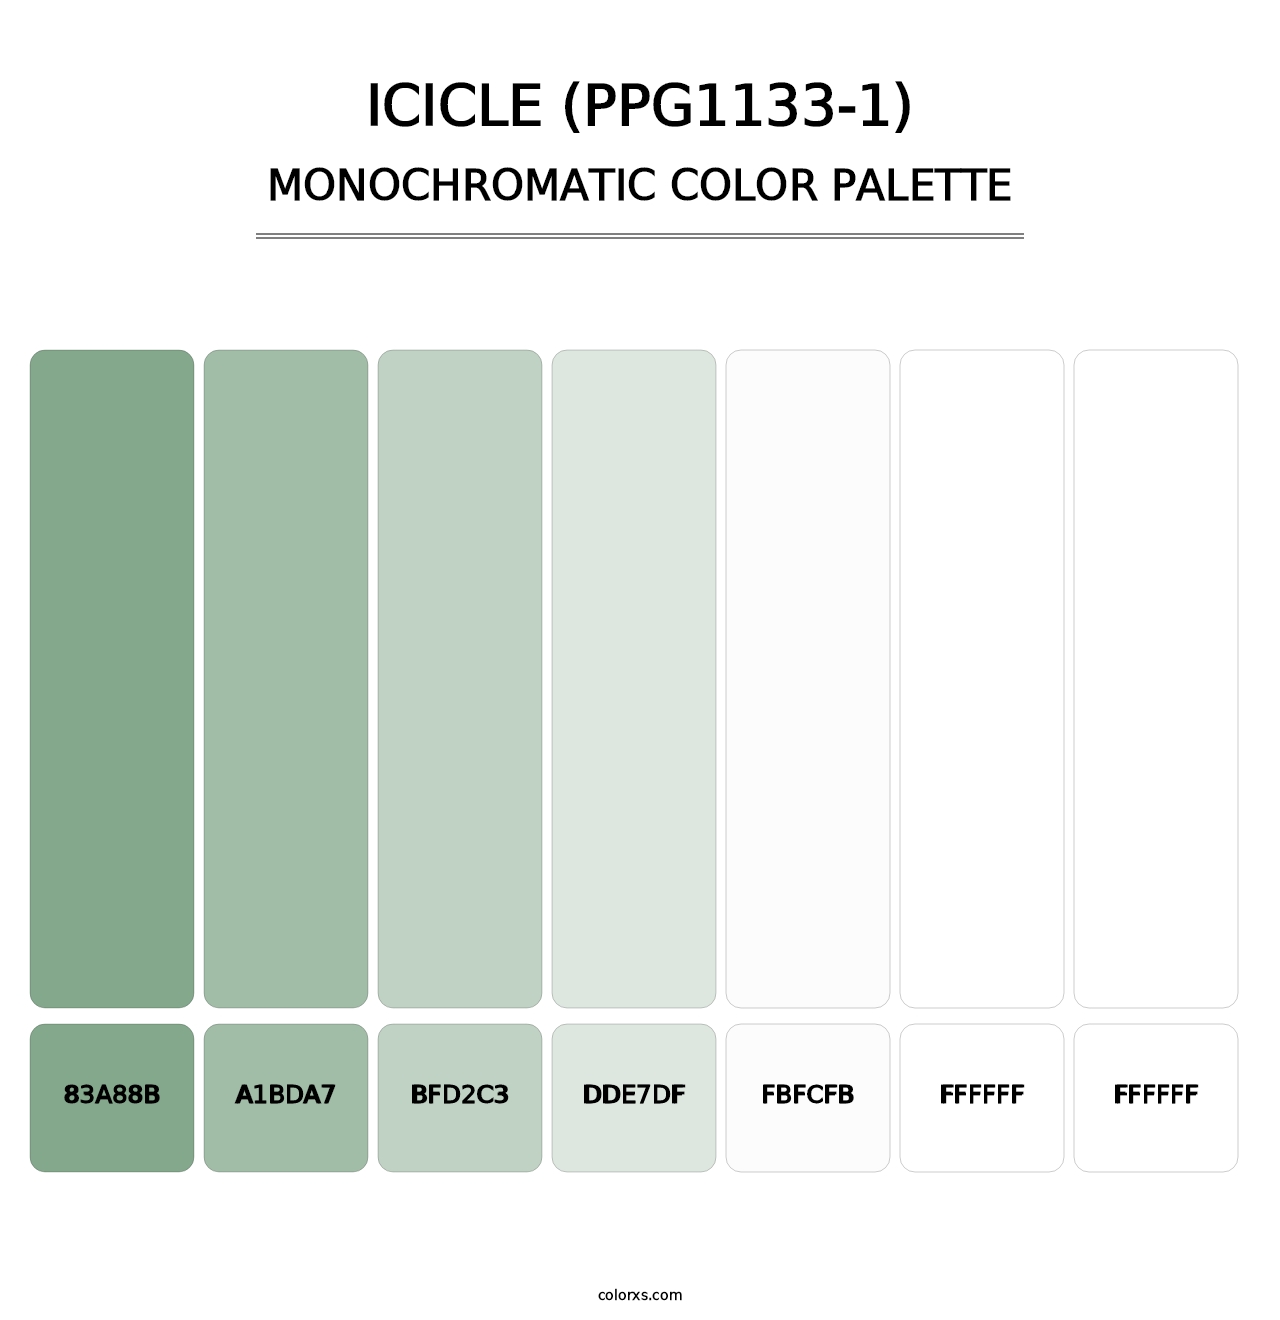 Icicle (PPG1133-1) - Monochromatic Color Palette